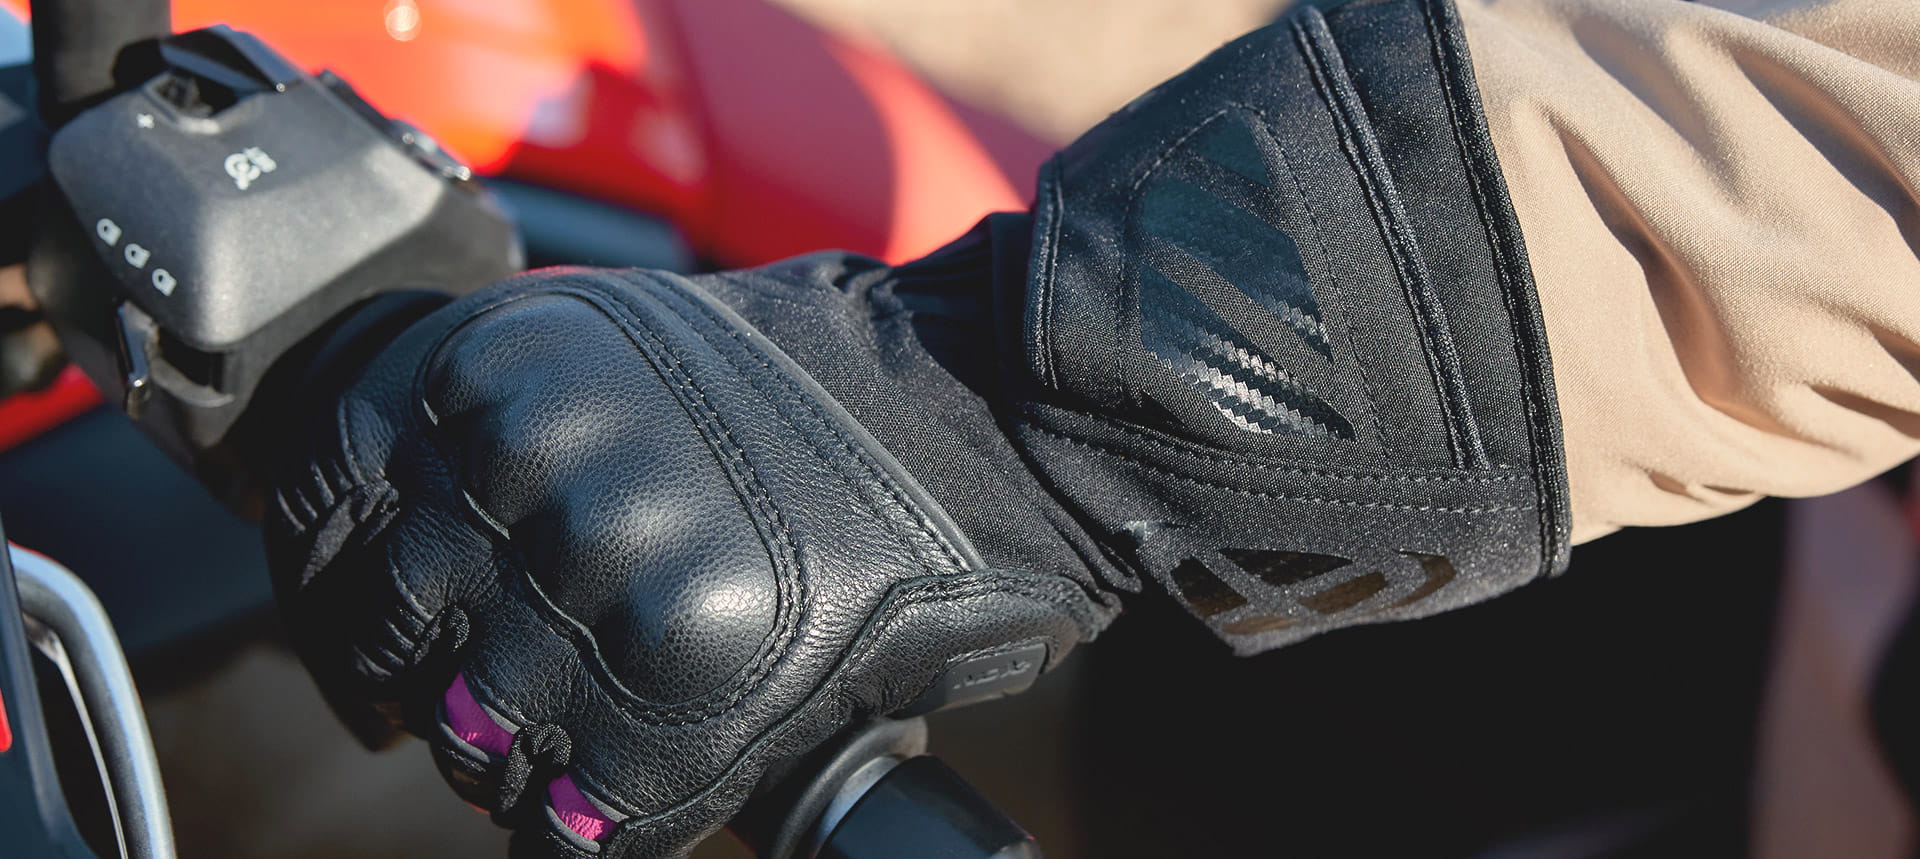 Sous-gants IXON FIT HAND - Moto Expert